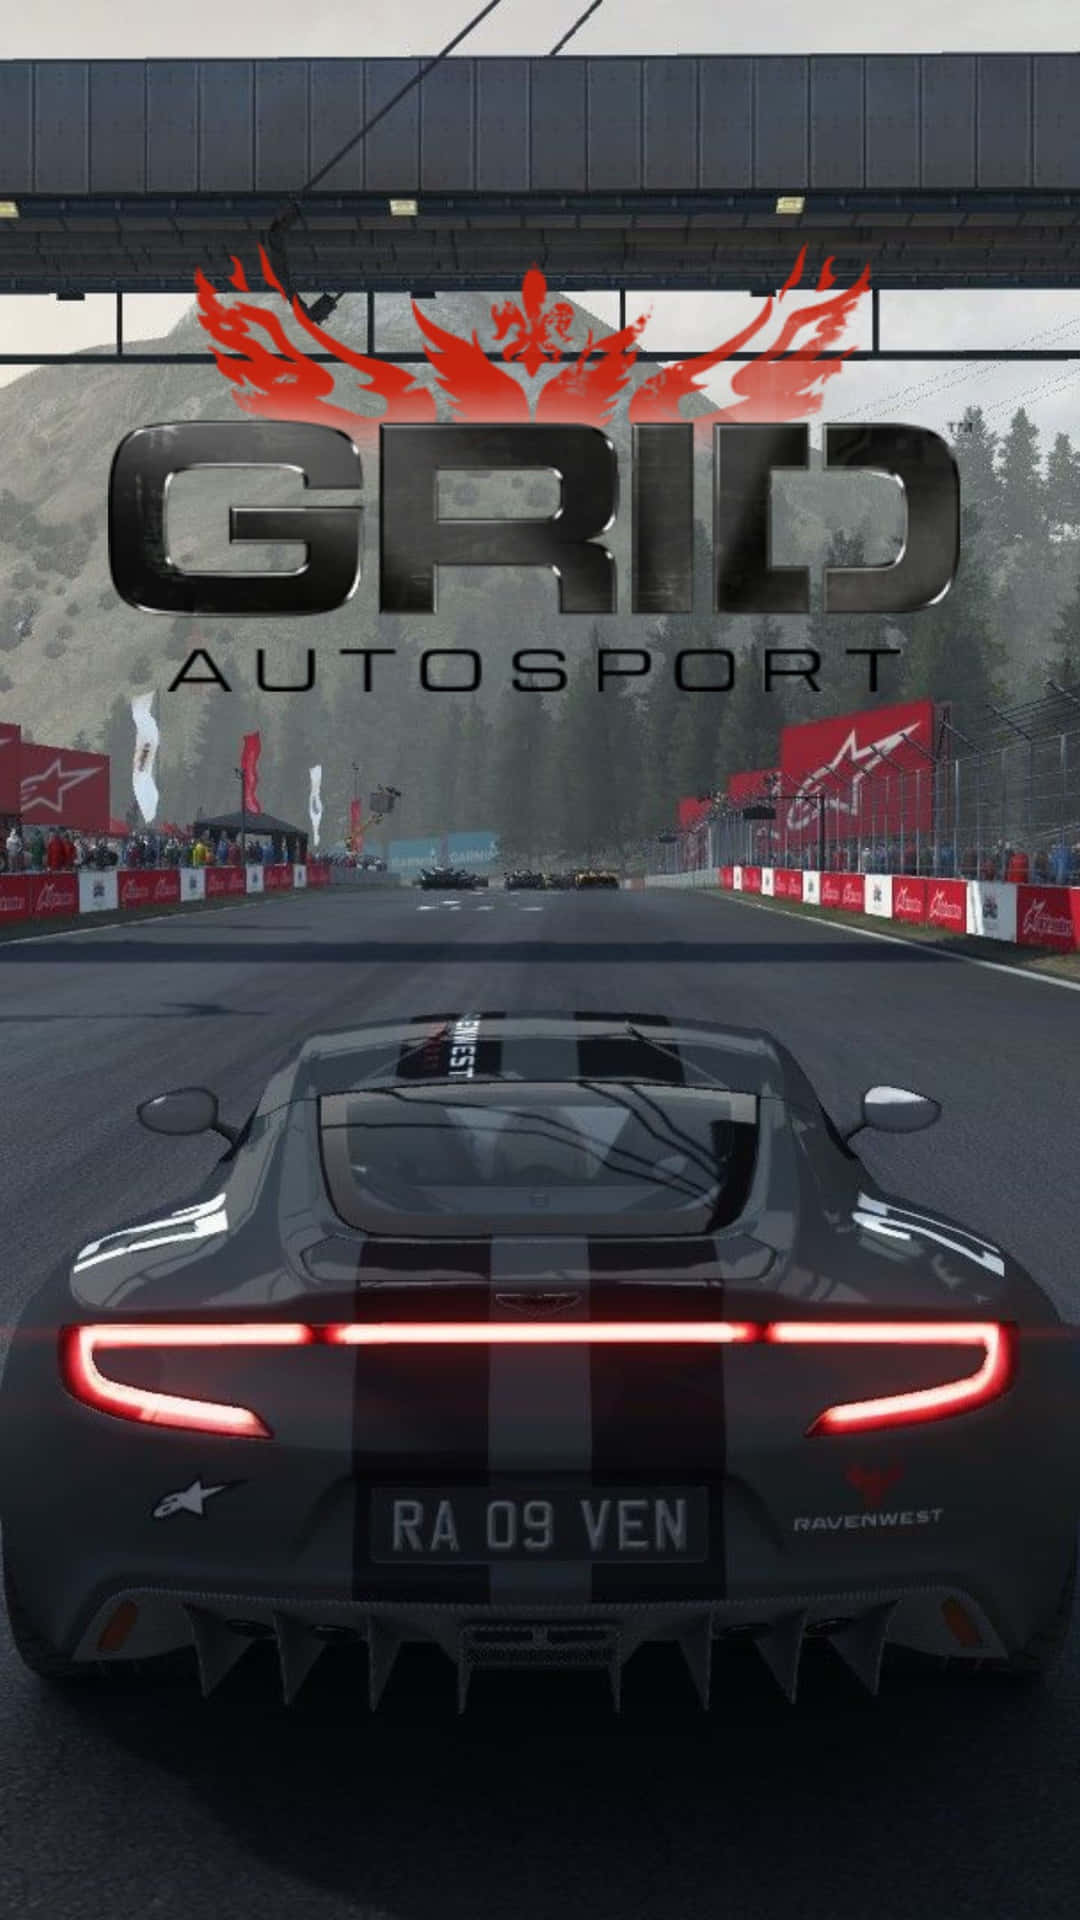 Grid Autosport - Screenshot